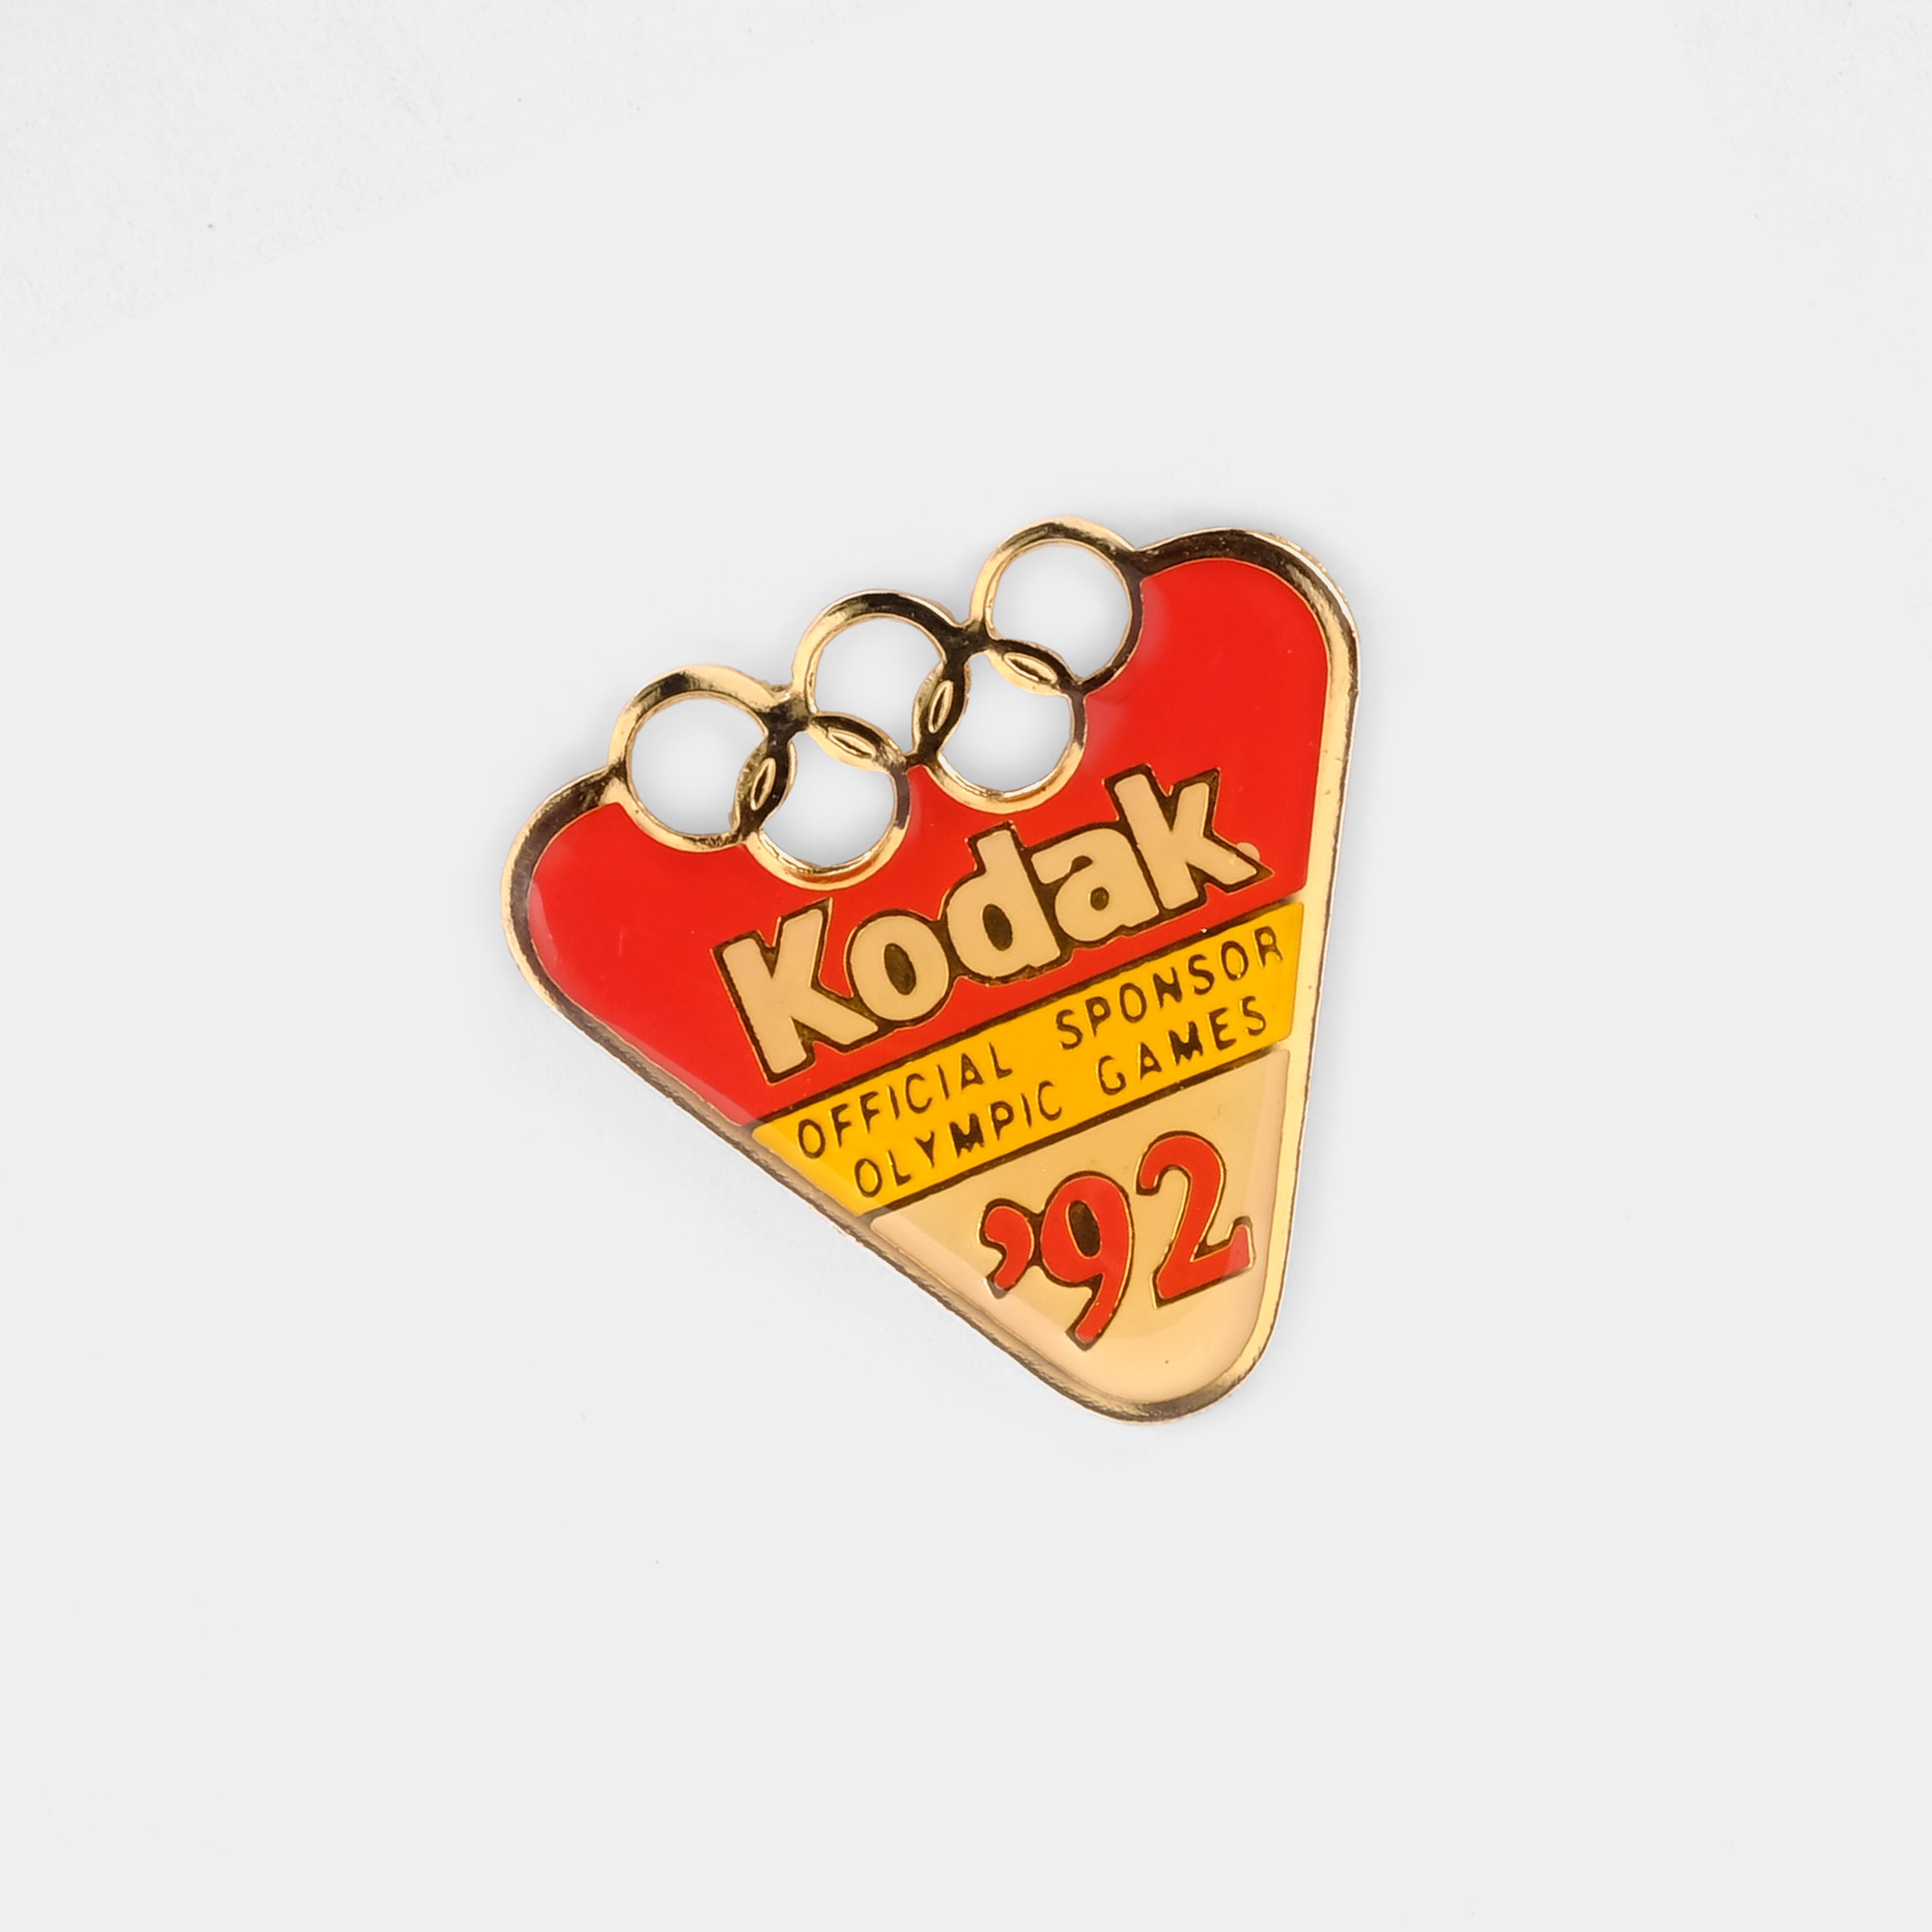 Kodak 92' "Official Sponsor of Olympic Games" Vintage Enamel Pin